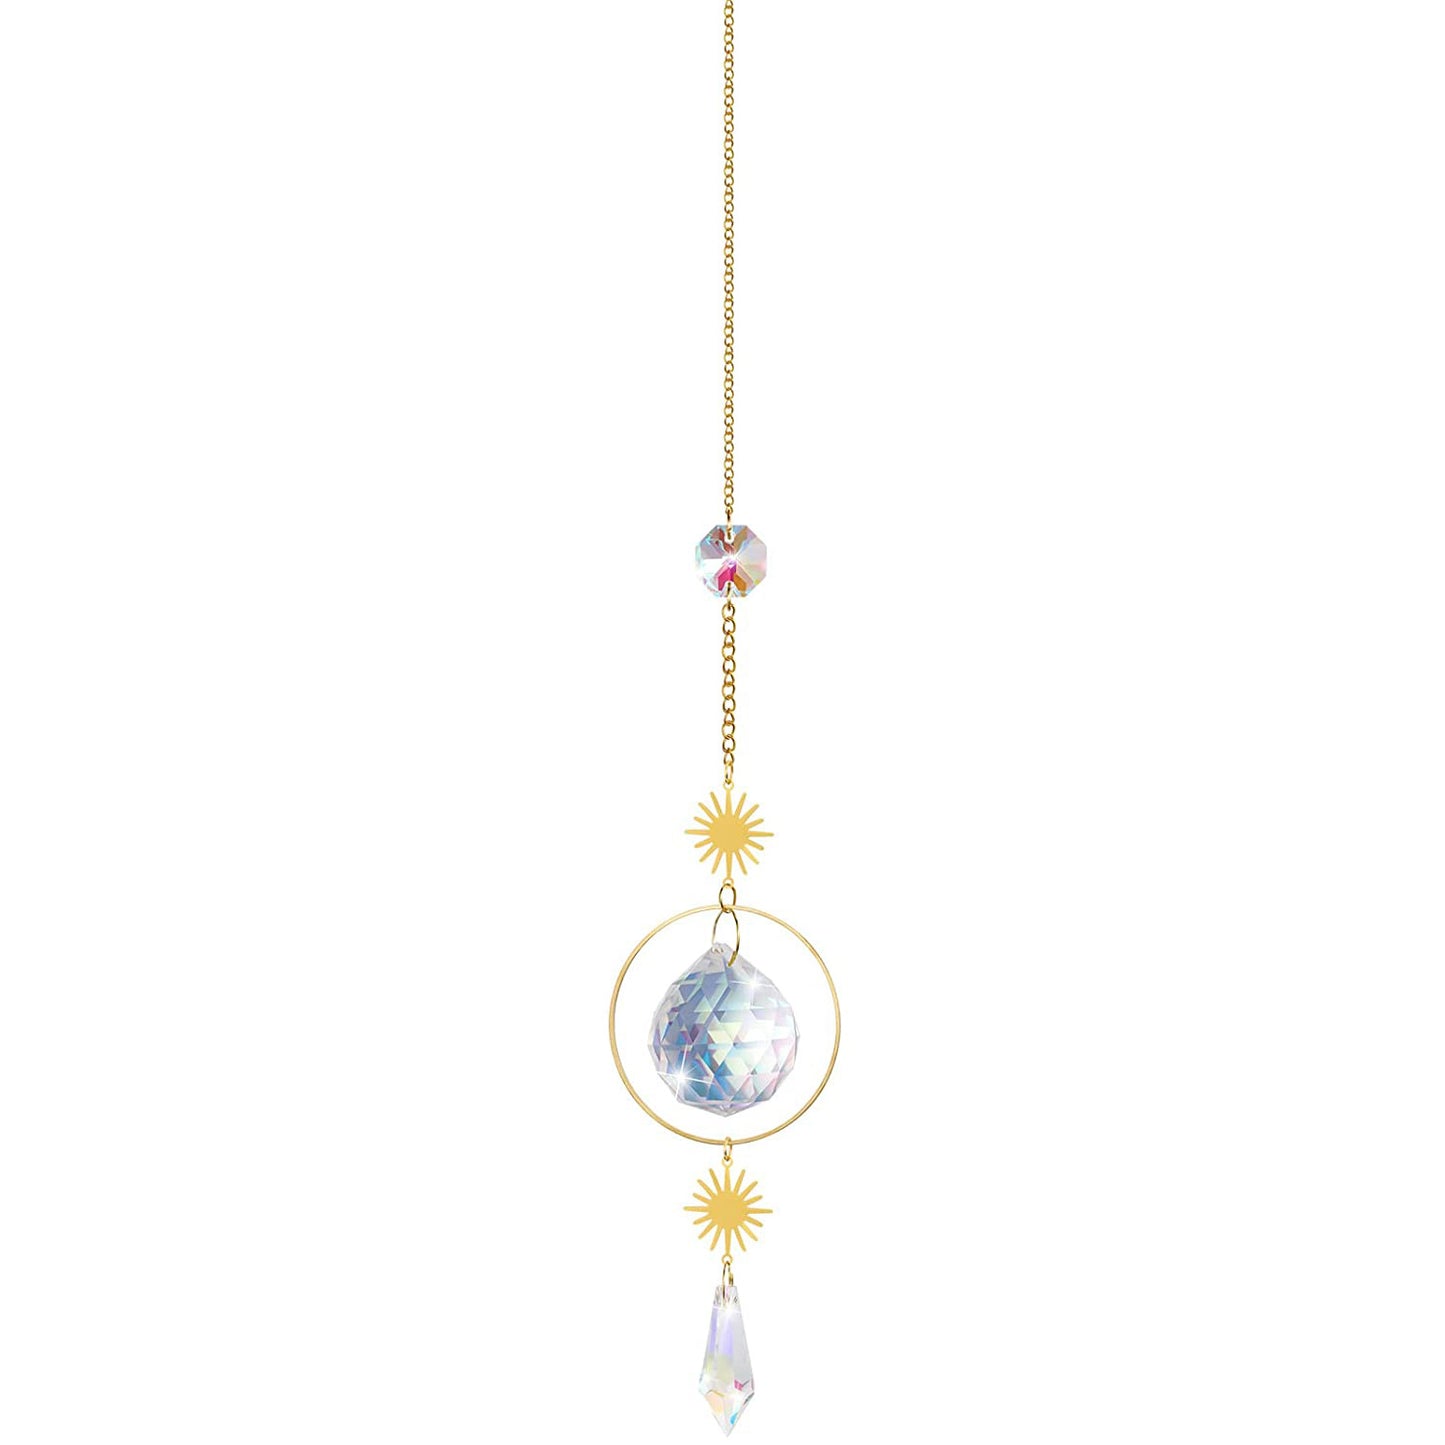 K9 Aura Crystal Hanger Suncatcher Sun Moon Star Brass Color - Long inch - China - NEW911